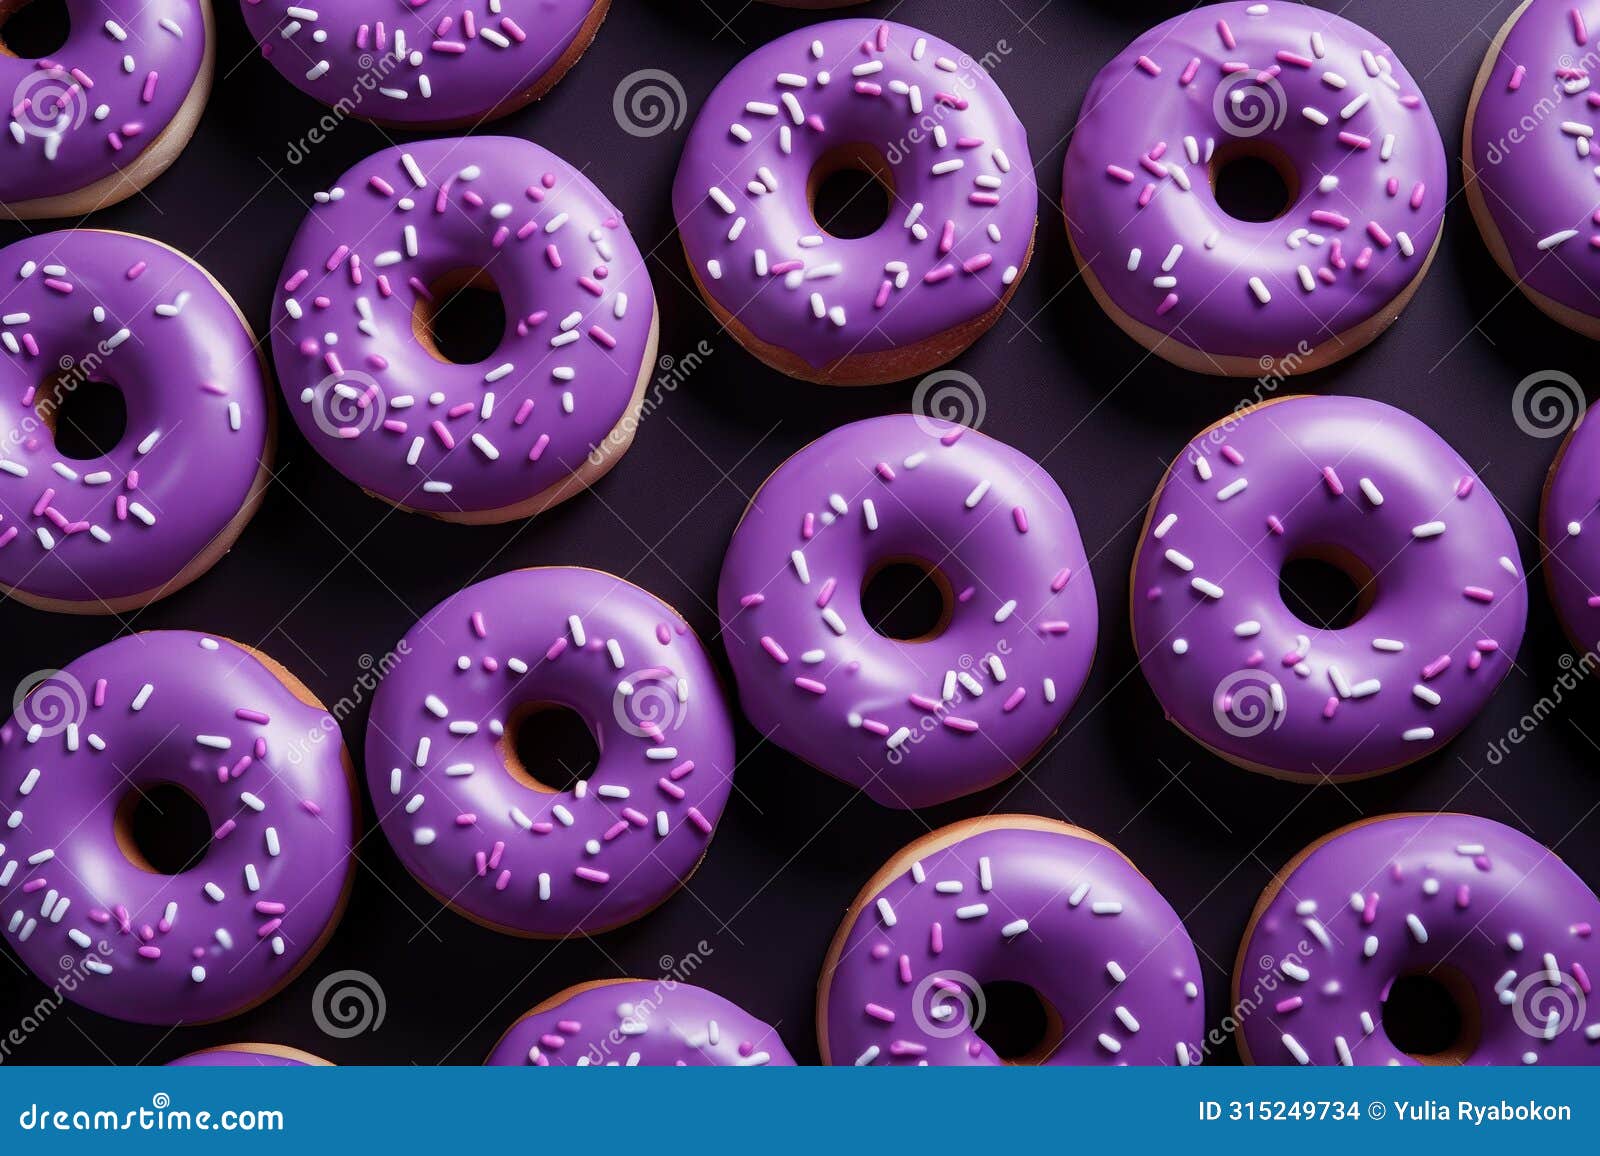 indulgent purple donuts food. generate ai